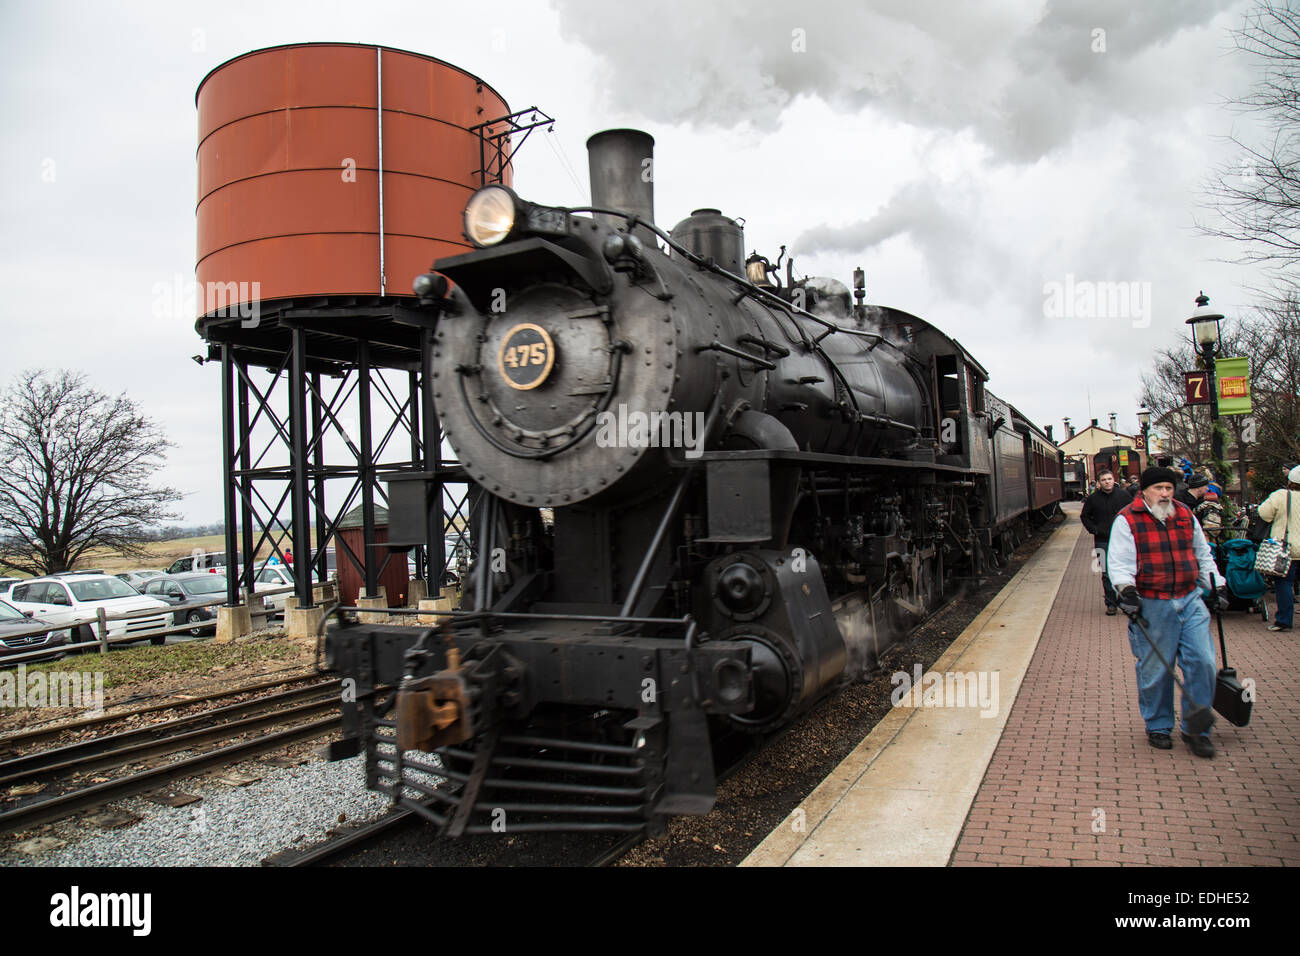 Eine dampfbetriebene Lokomotive kommt am Bahnhof Straßburg in Lancaster County, PA. Stockfoto